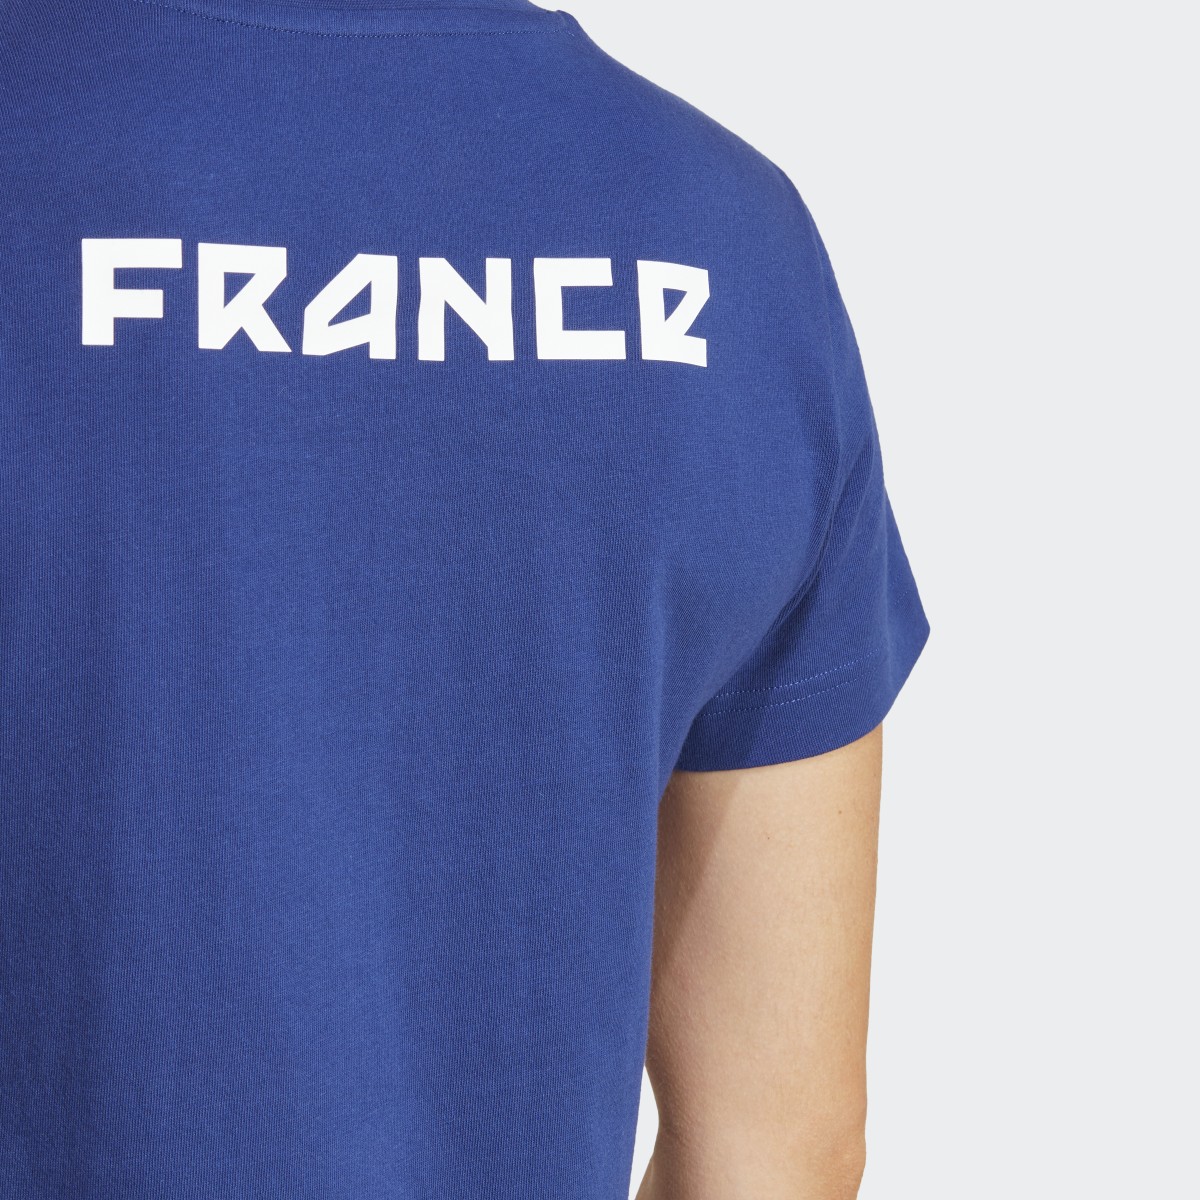 Adidas France Cotton Graphic T-Shirt. 7